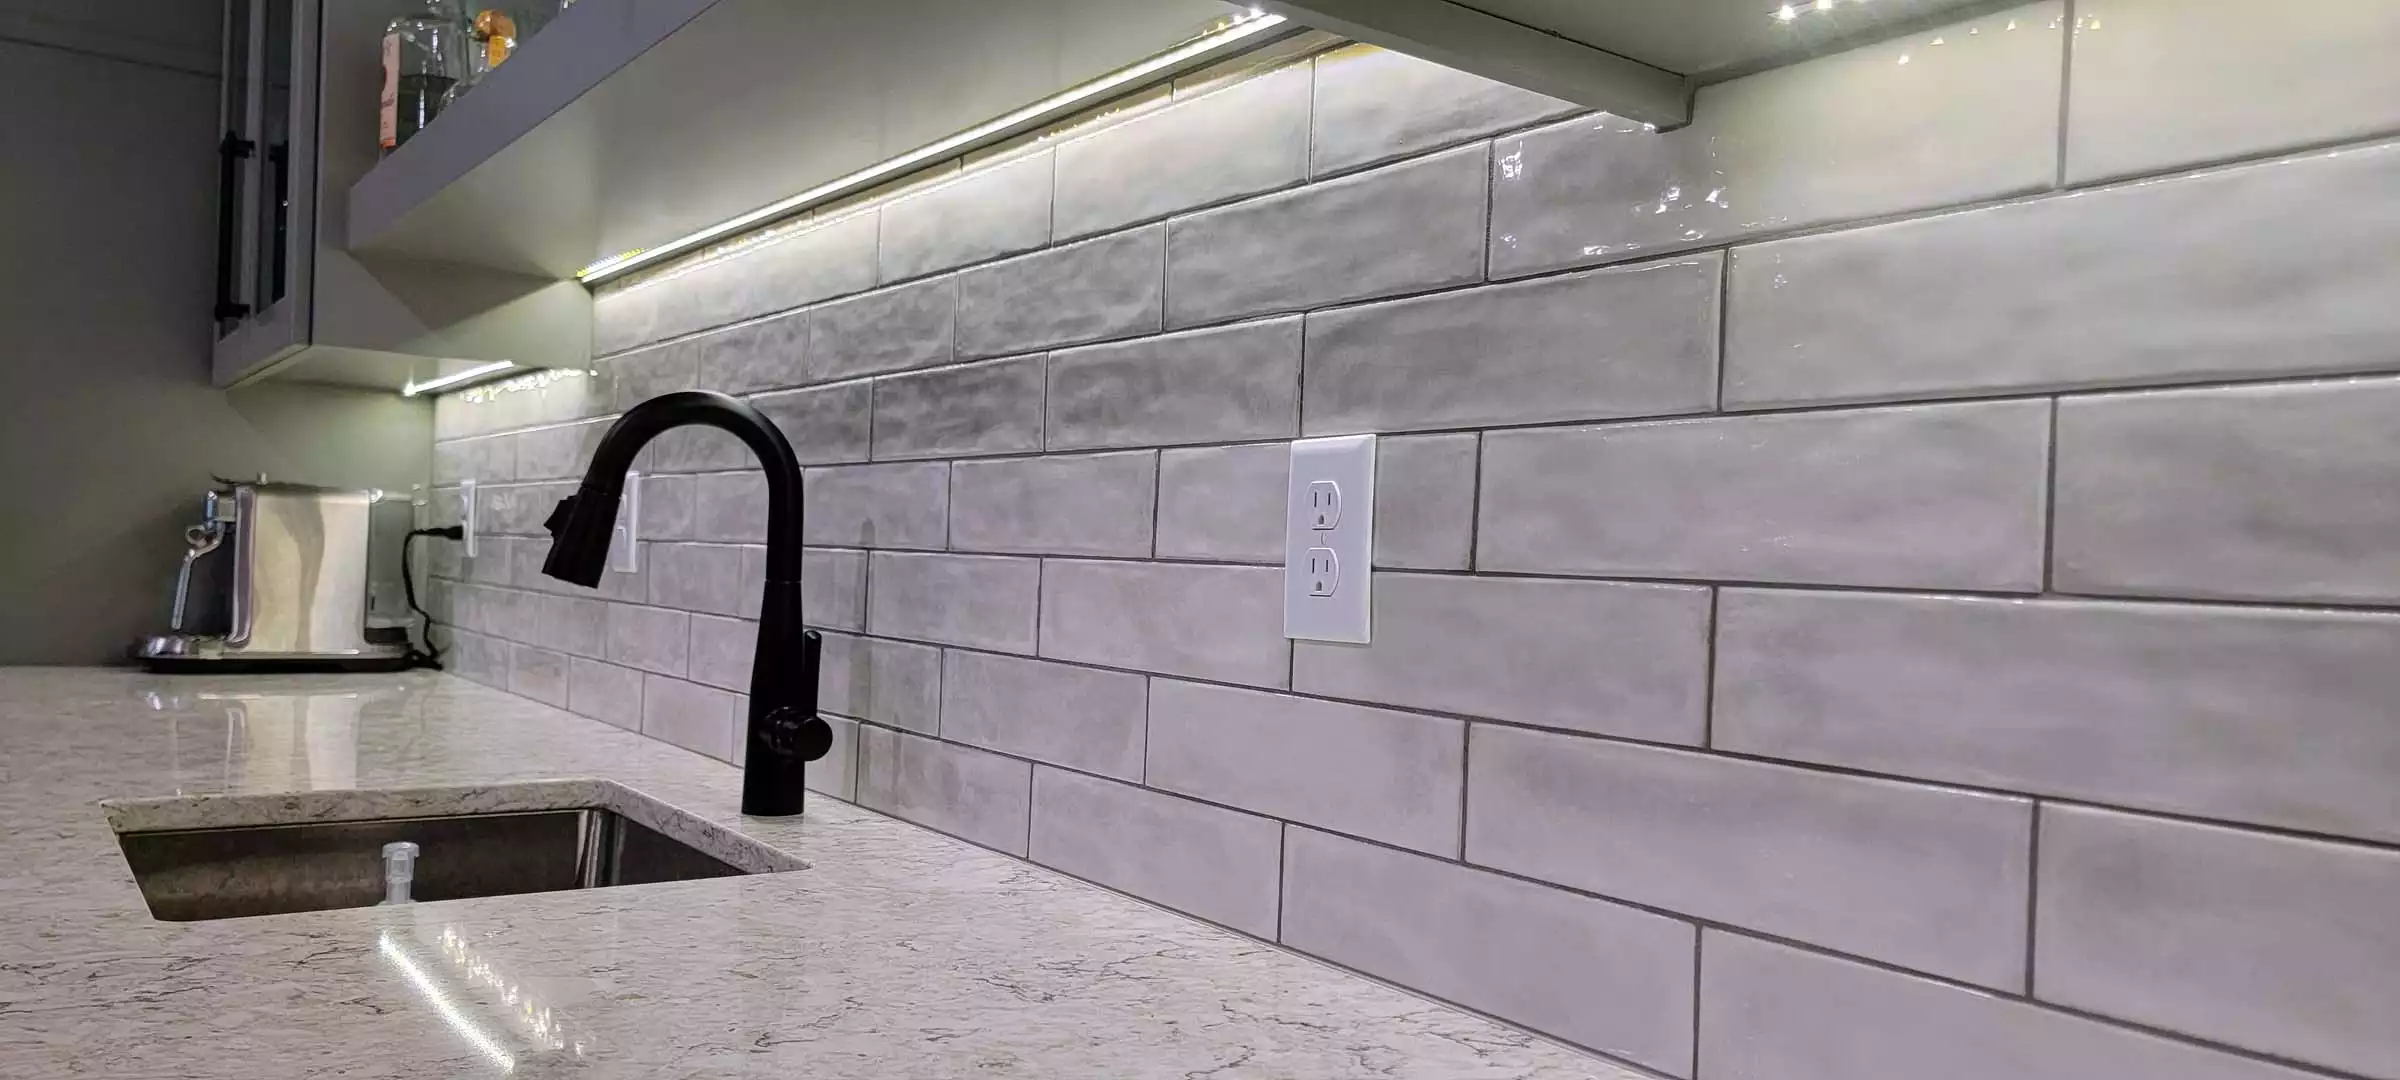 Subway tile backsplash